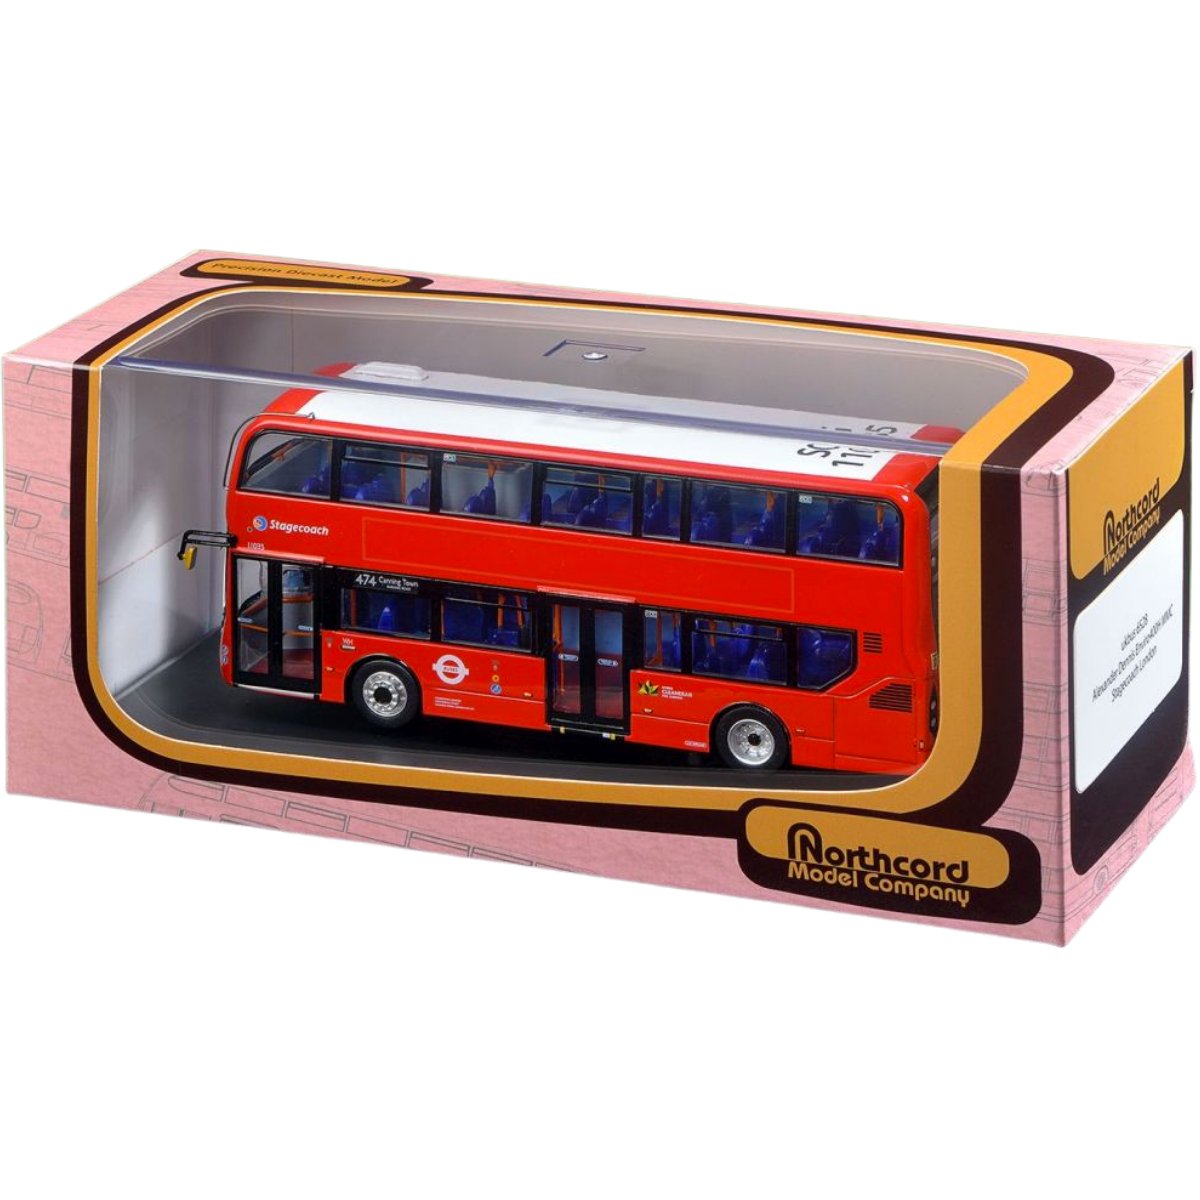 Northcord UK6528 ADL Enviro400 MMC 11035 Stagecoach London